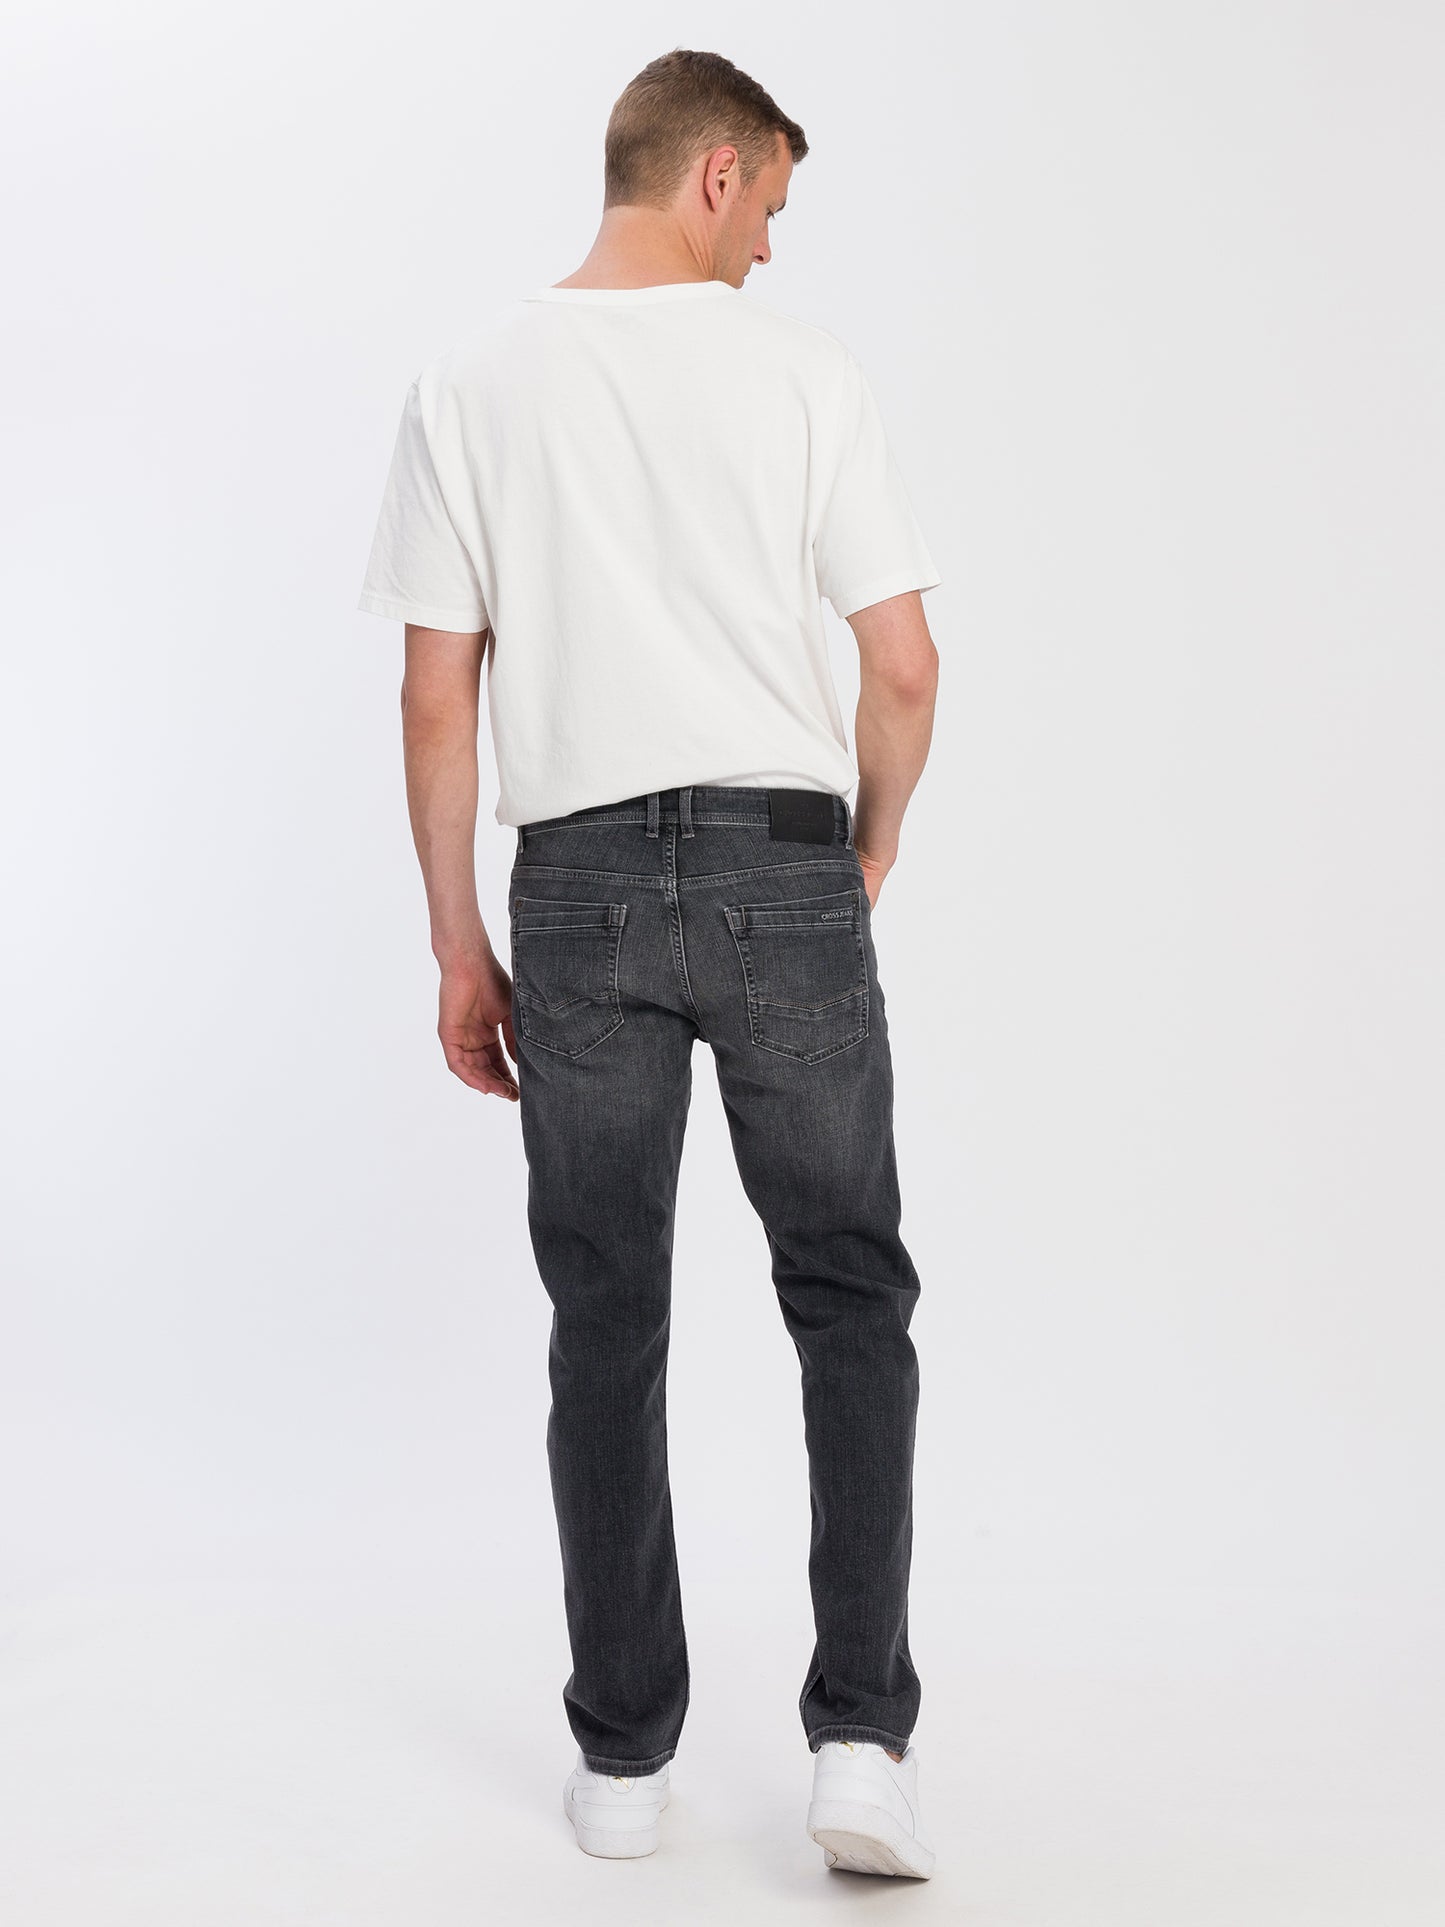 Antonio men's jeans relaxed fit regular waist straight leg dark grey